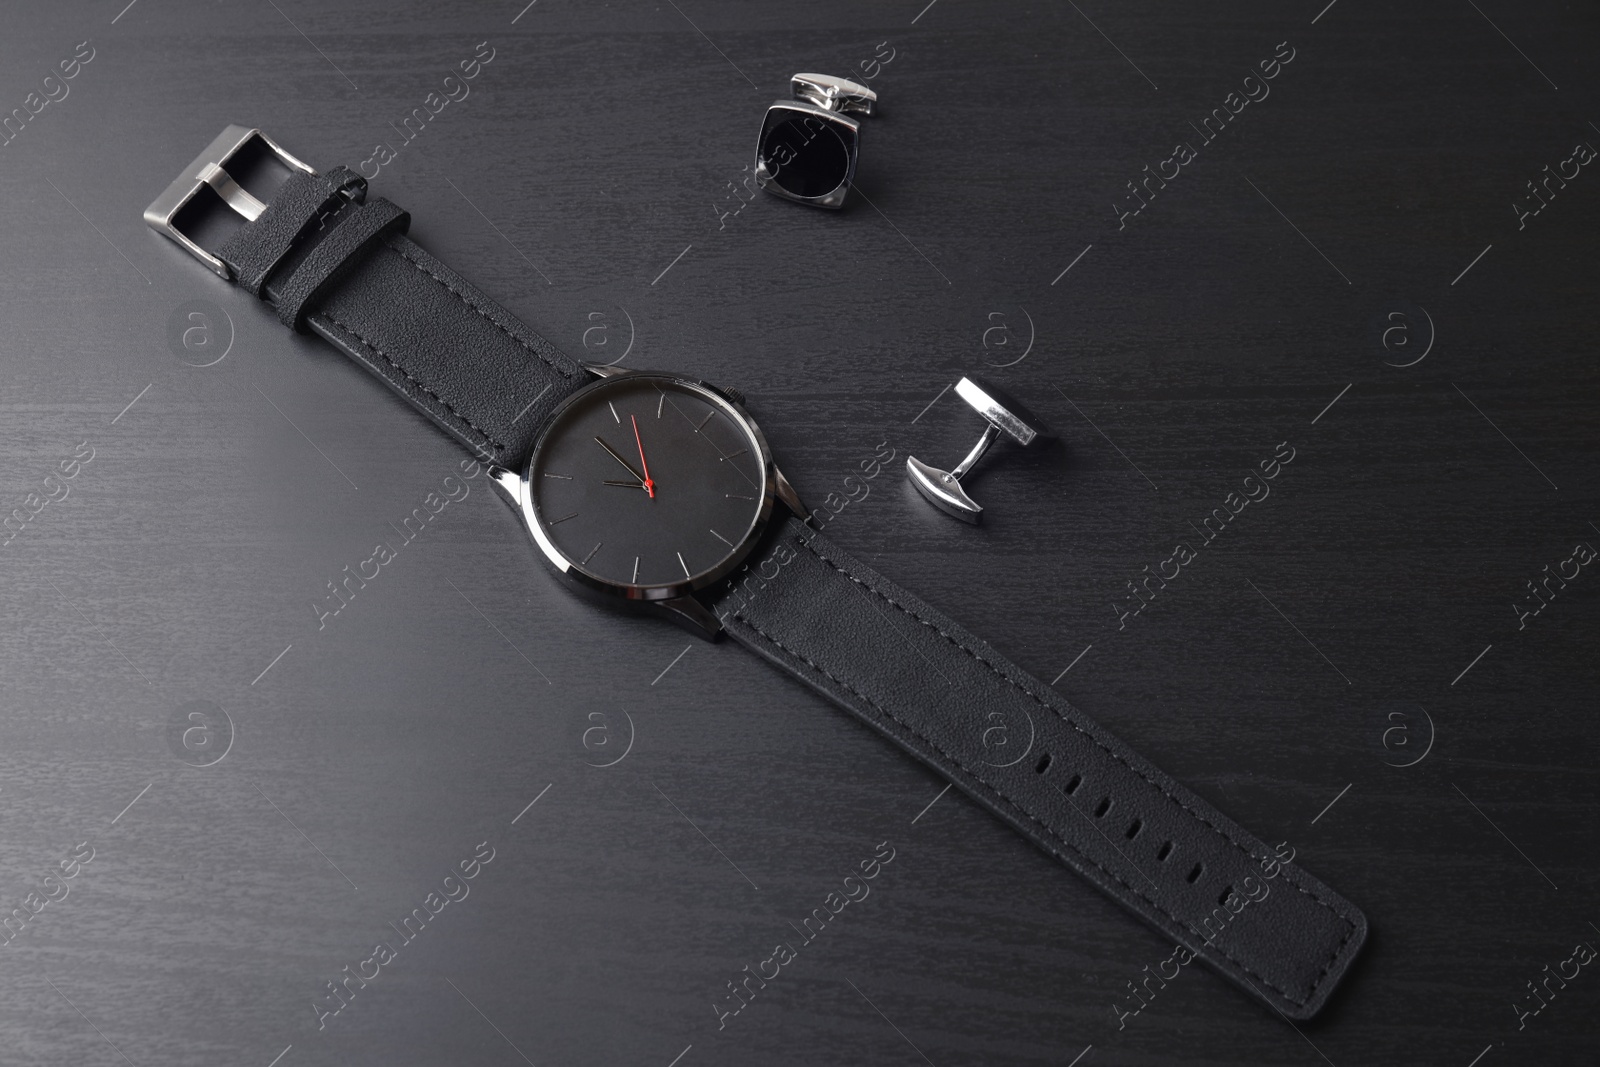 Photo of Stylish wrist watch and cuff links on dark table. Fashion accessory